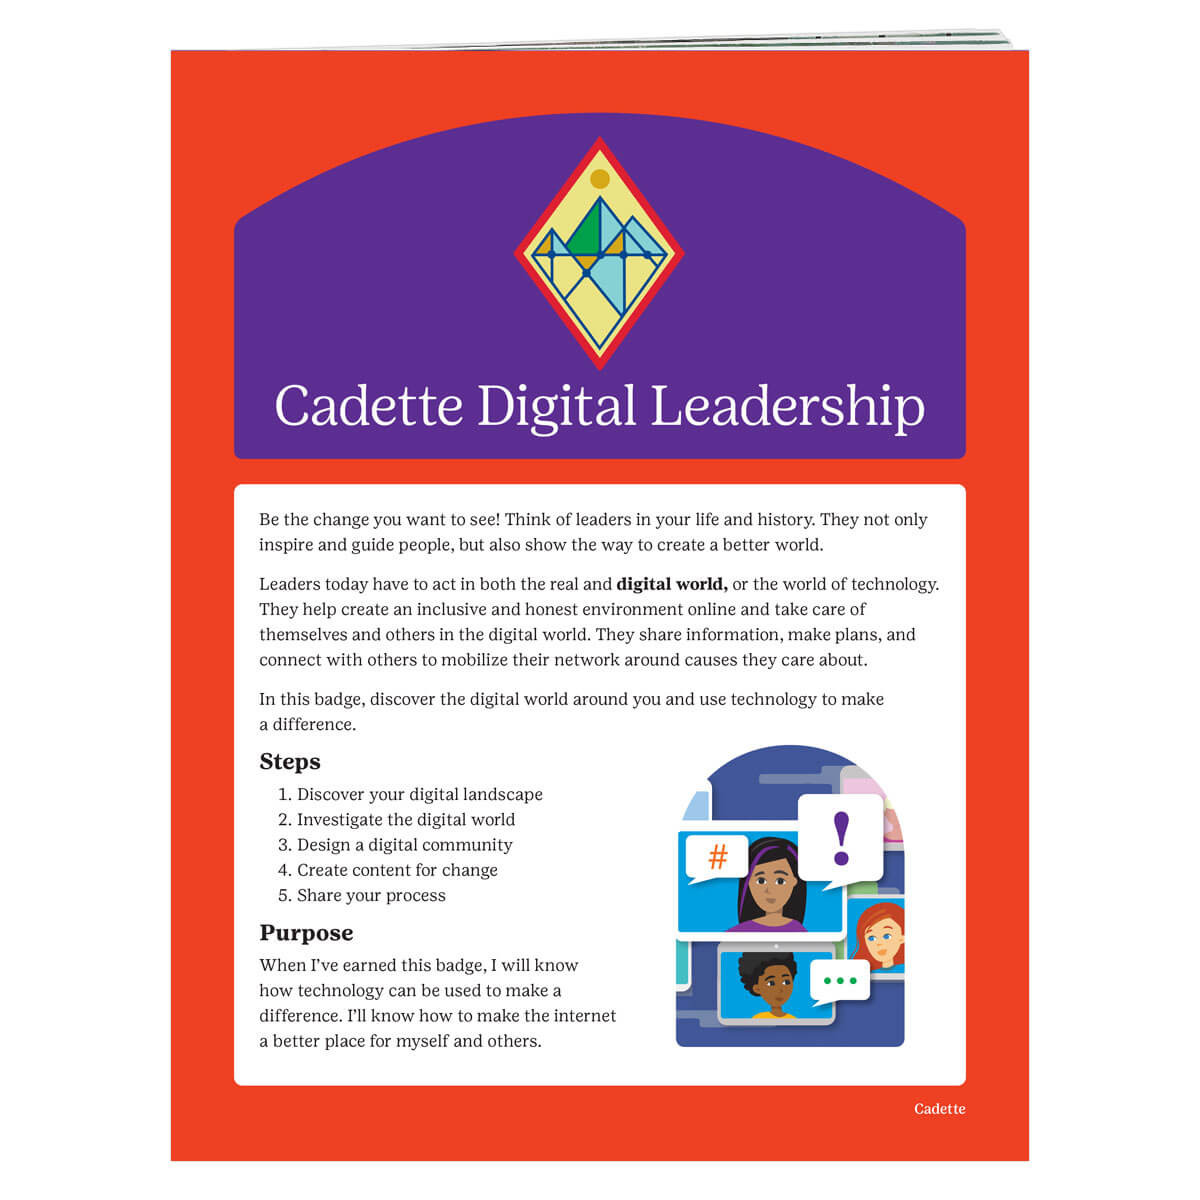 Cad. Digital Leadership REQ 